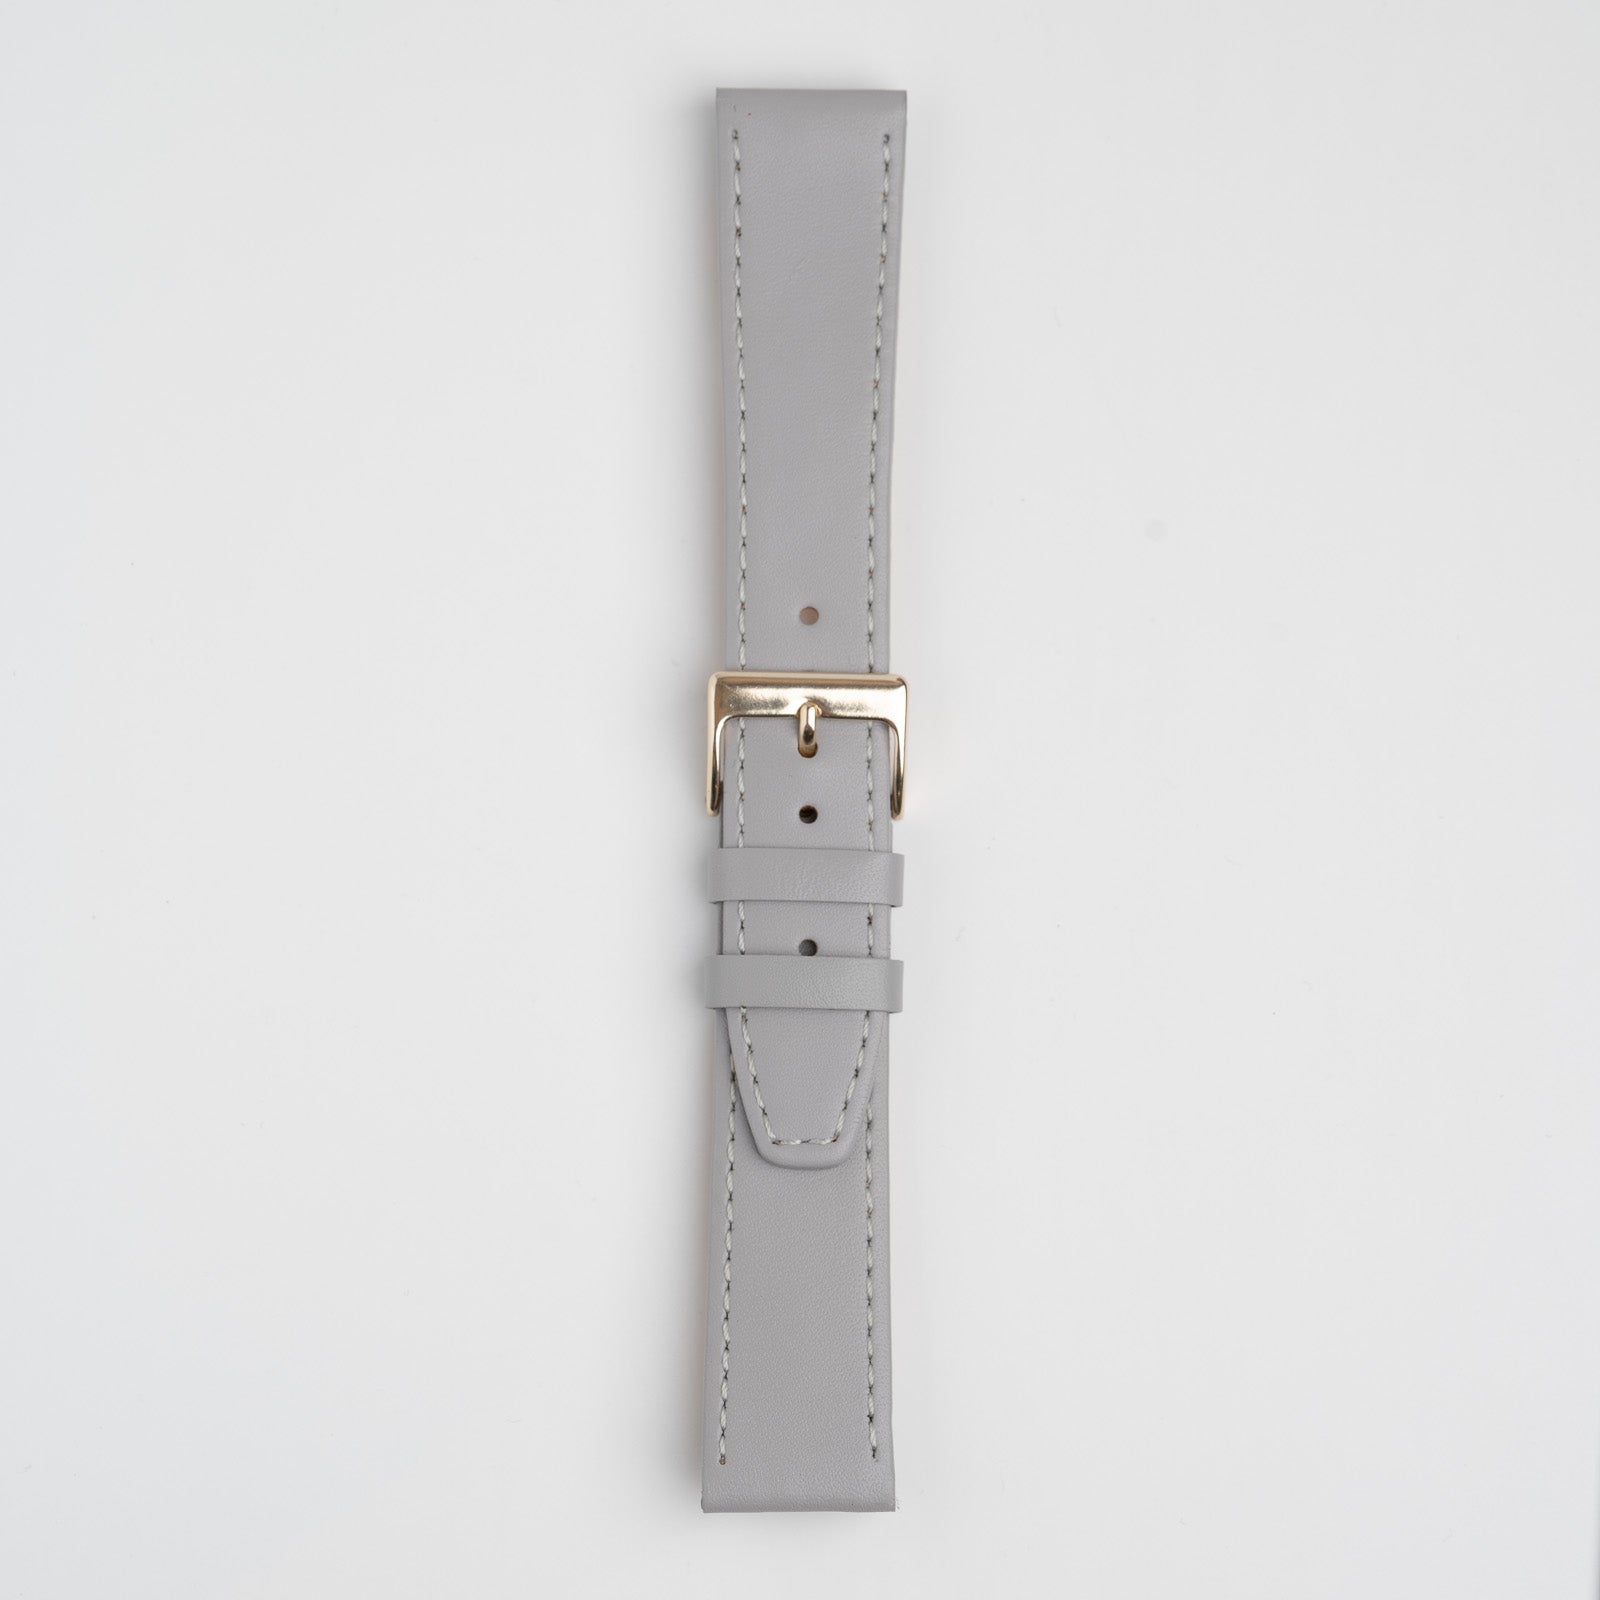 Mayfair Subtle Grey Watch Strap